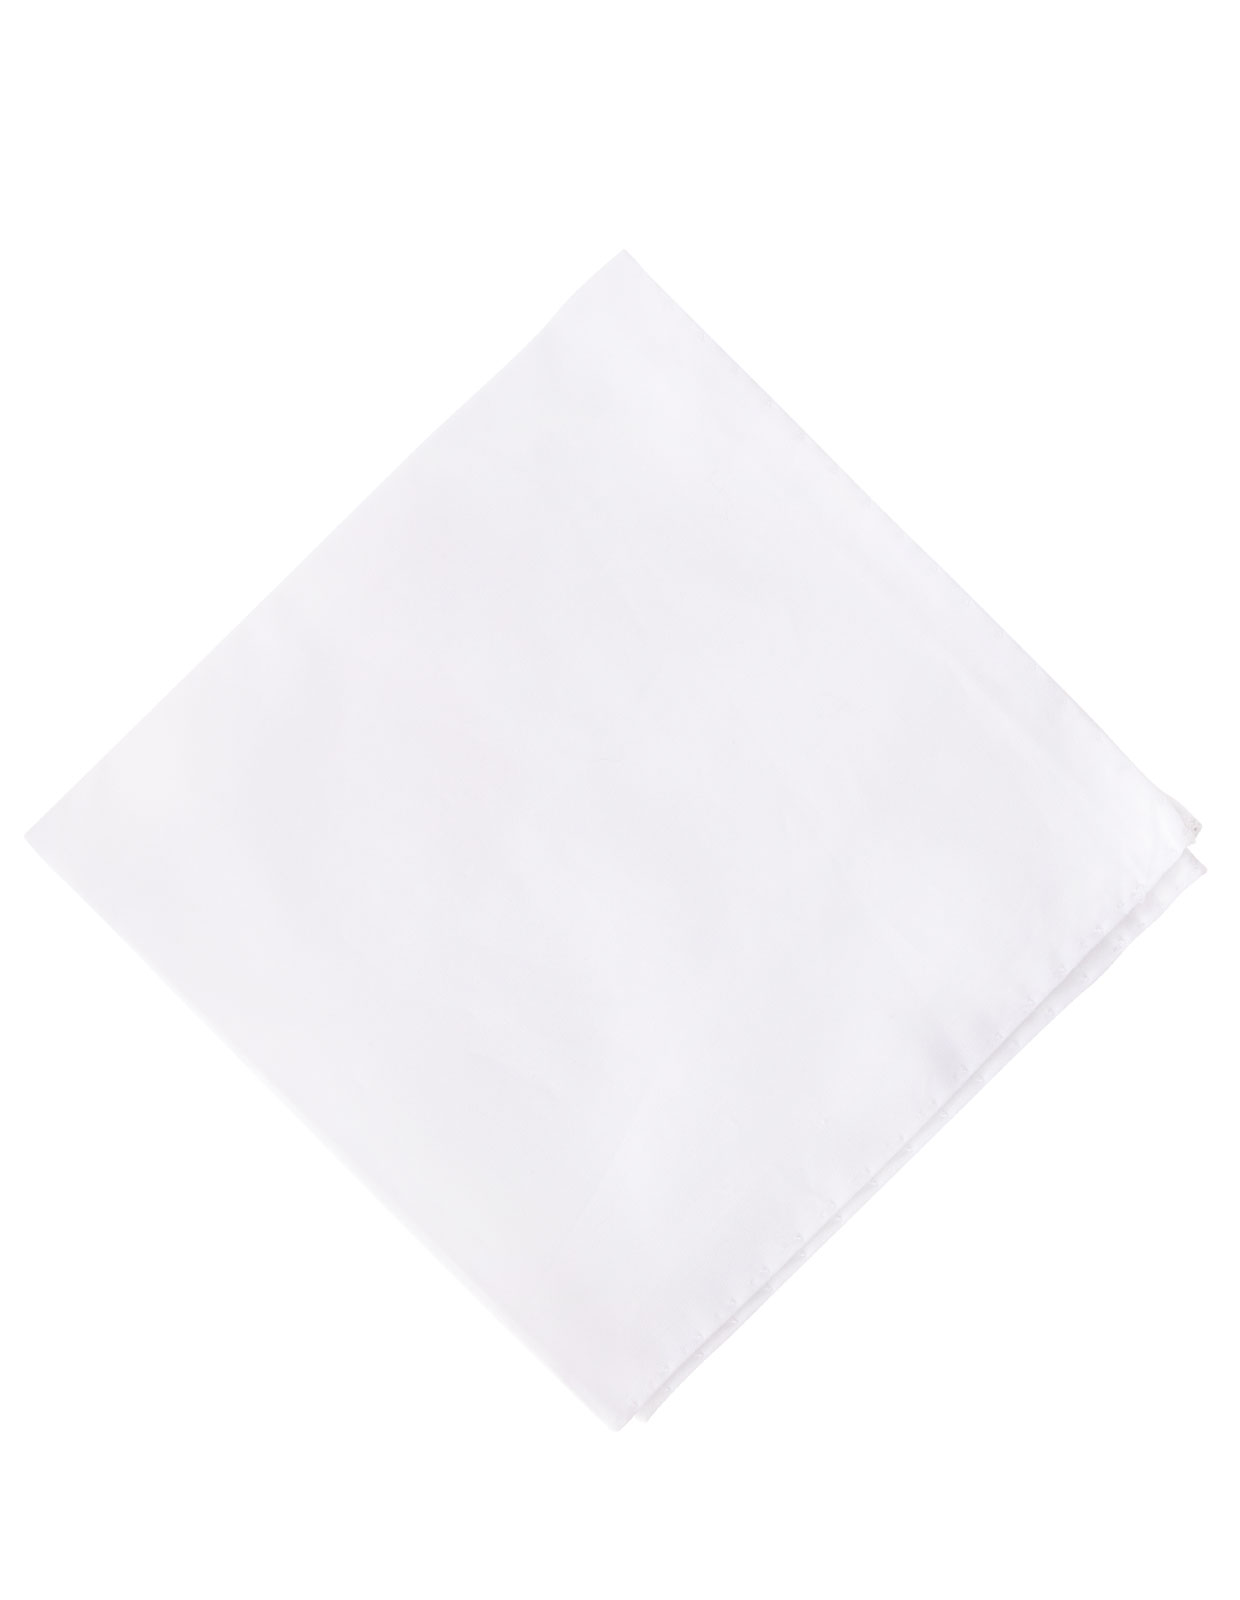 Pocket Square Cotton White